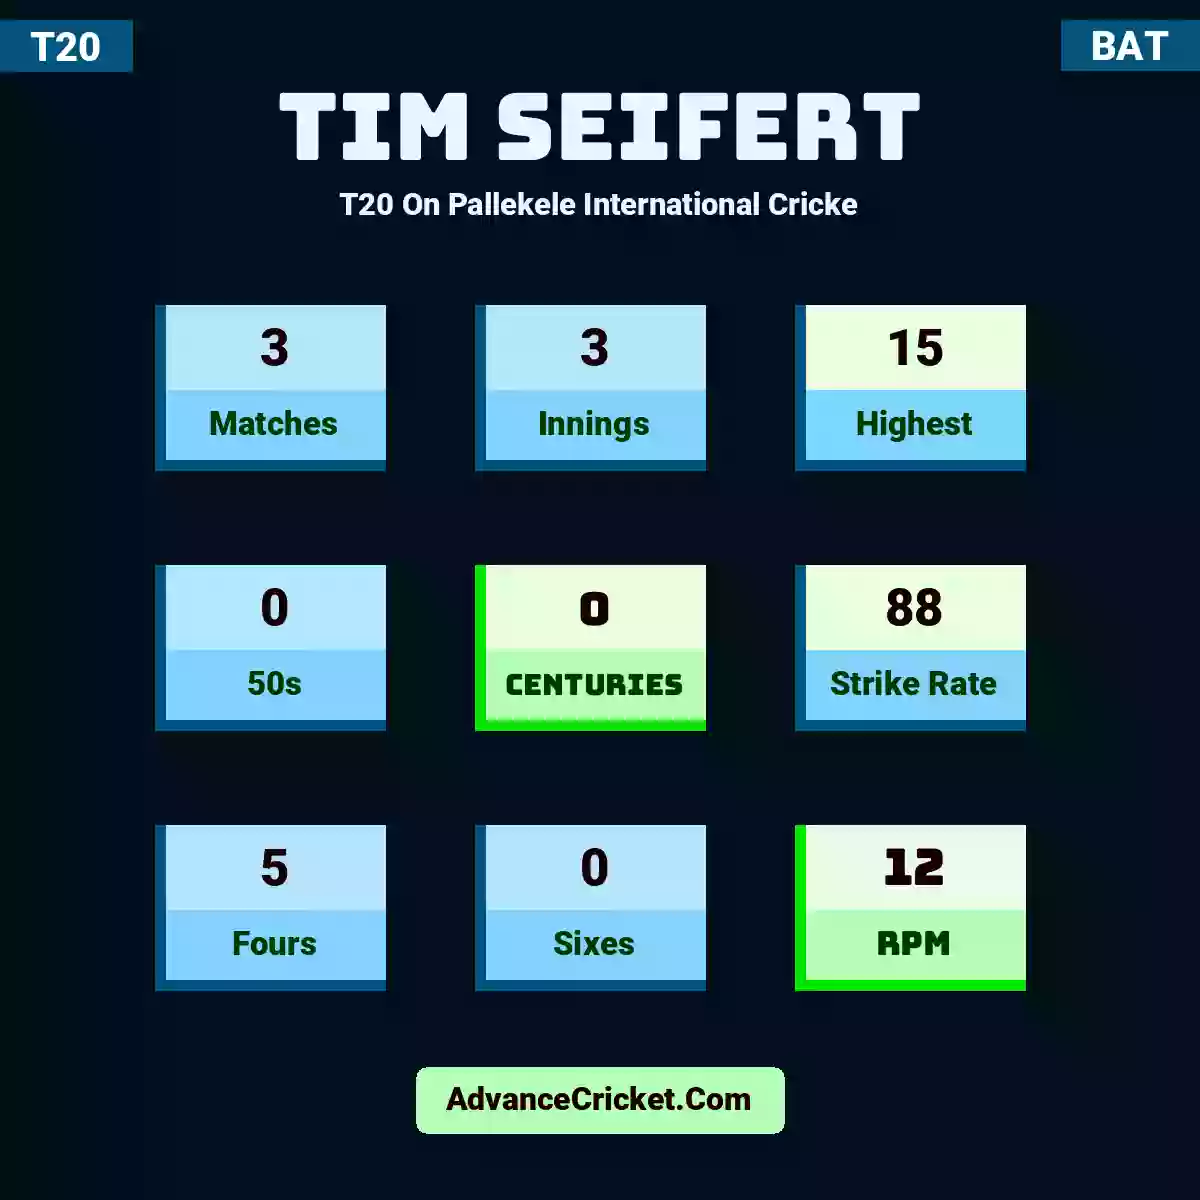 Tim Seifert T20  On Pallekele International Cricke, Tim Seifert played 3 matches, scored 15 runs as highest, 0 half-centuries, and 0 centuries, with a strike rate of 88. T.Seifert hit 5 fours and 0 sixes, with an RPM of 12.